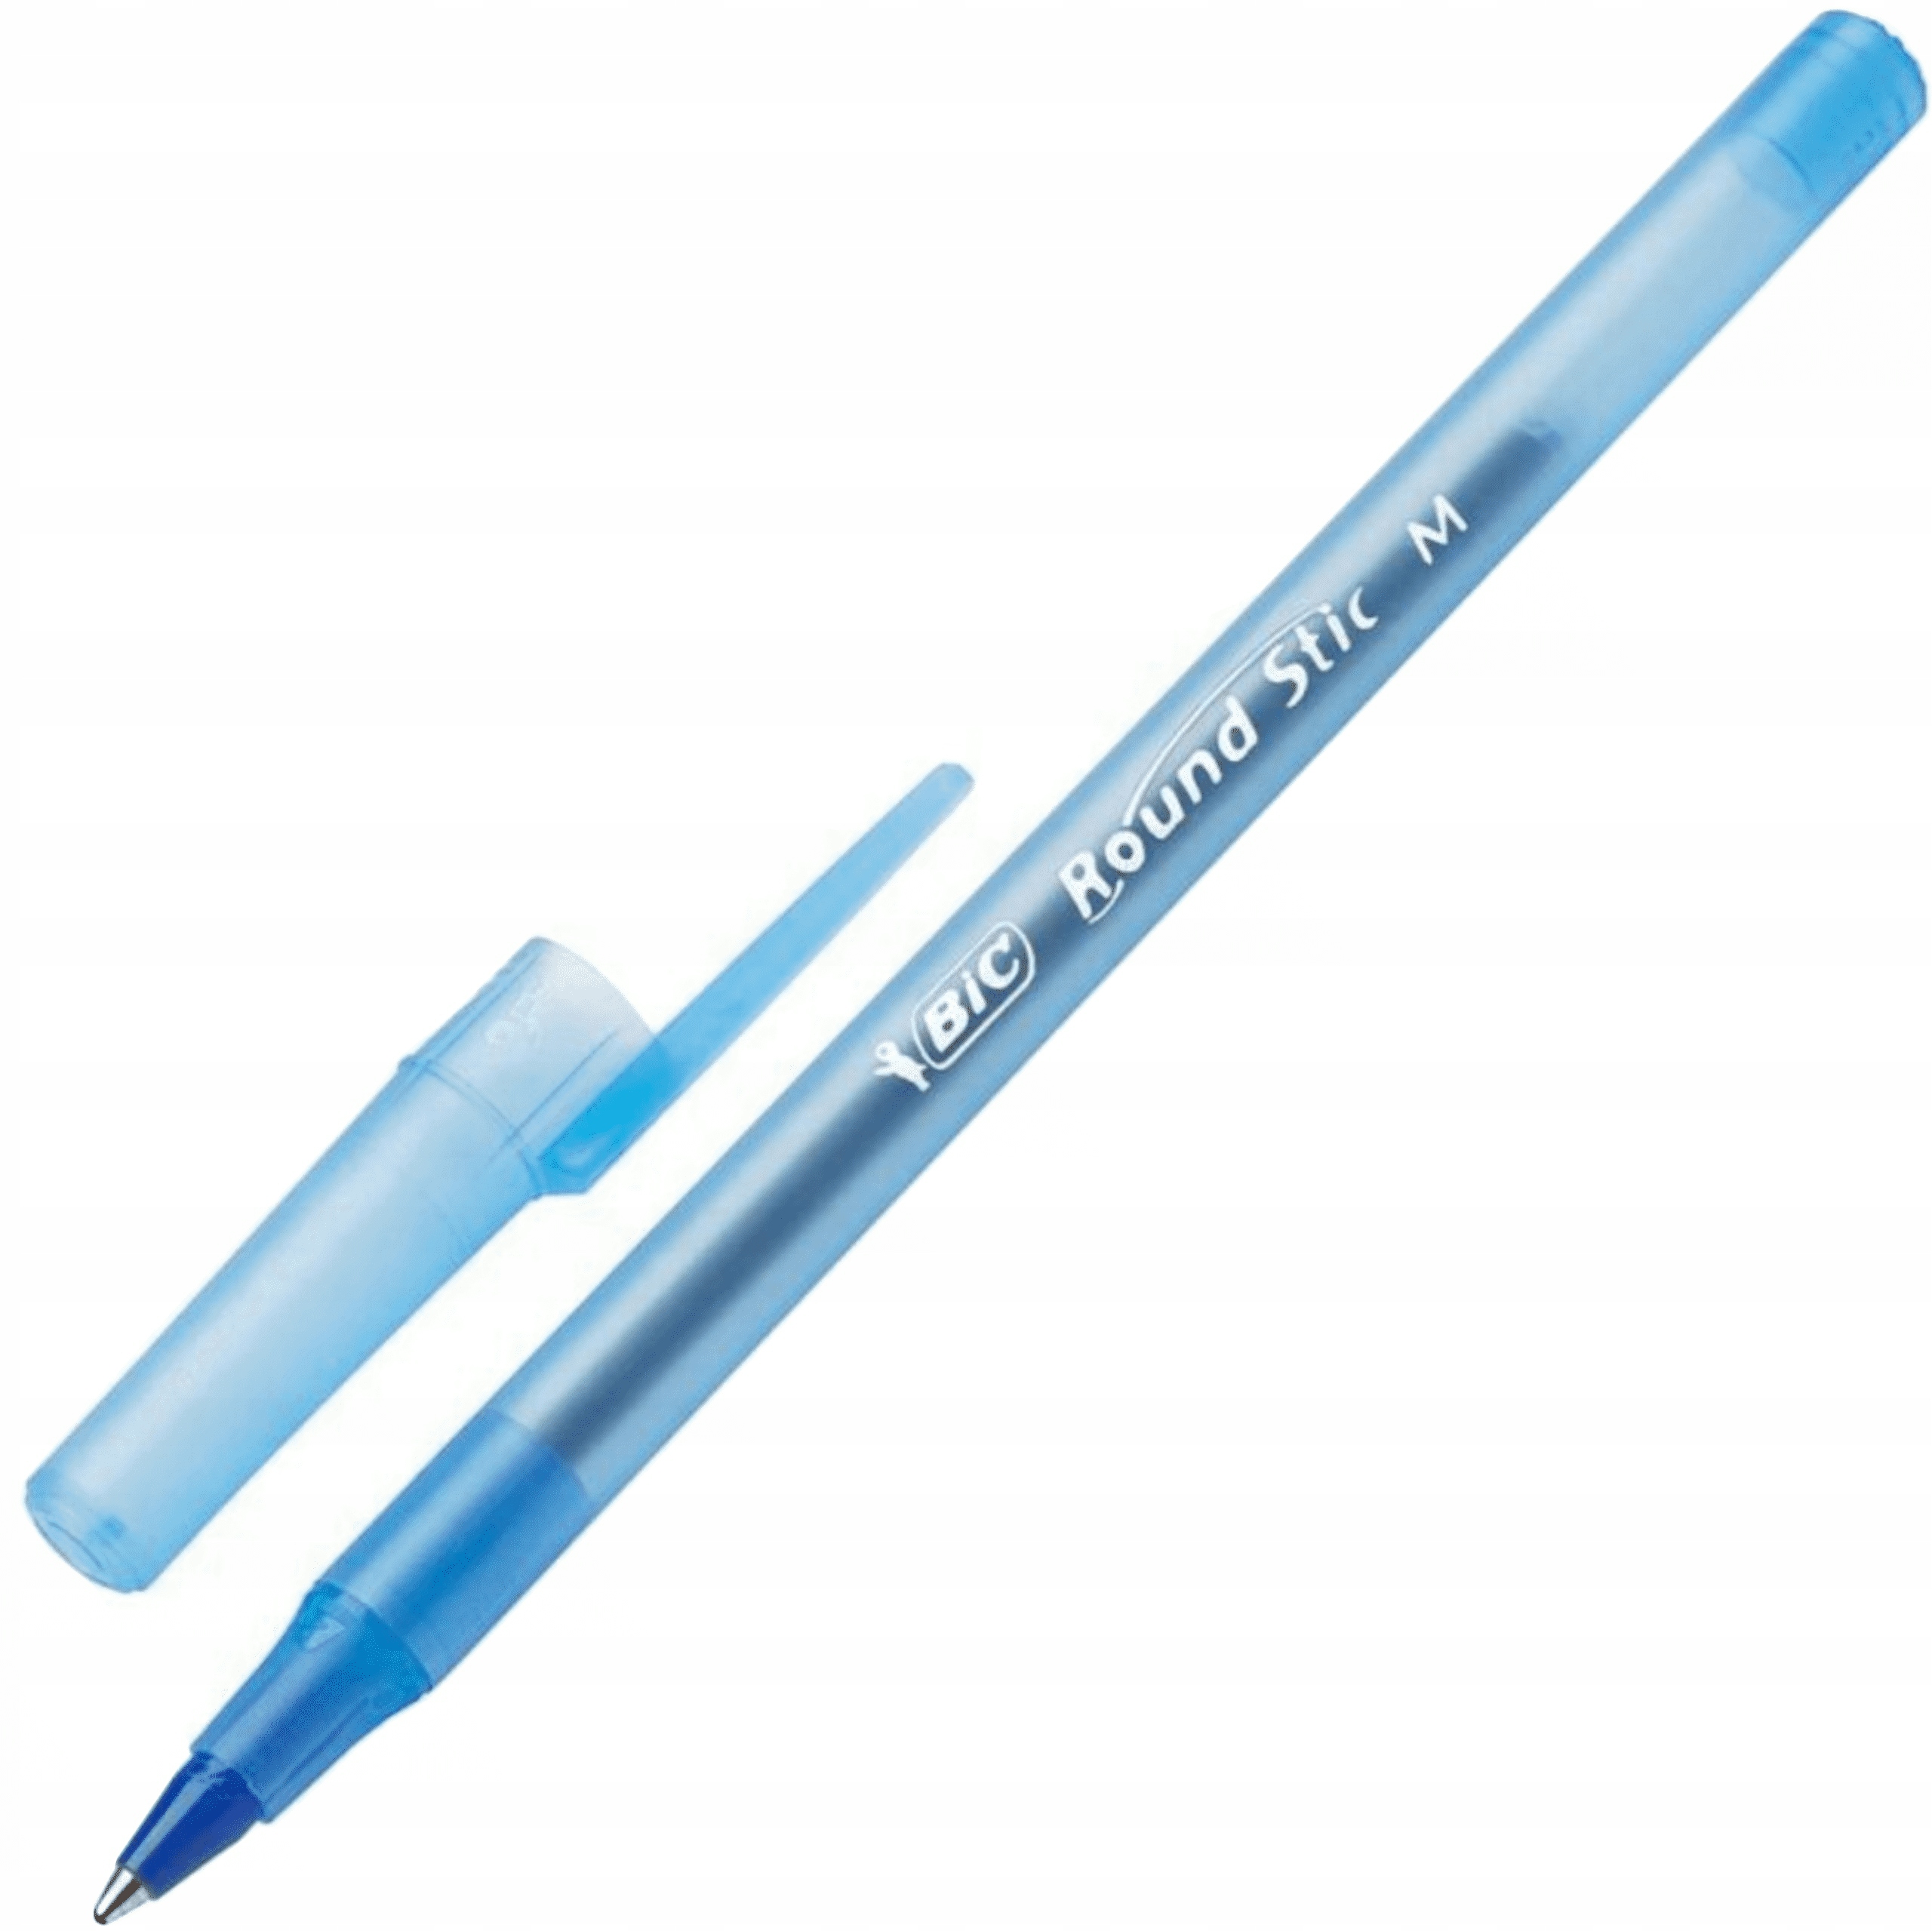 Ручки round stic. Ручка шариковая BIC "Round Stic" синяя, 1,0мм. Ручка шариковая BIC Round Stic Classic. Ручка шариковая BIC раунд стик синяя, 921403,0,4 мм. Ручка BIC Round Stic m (голубой корпус).